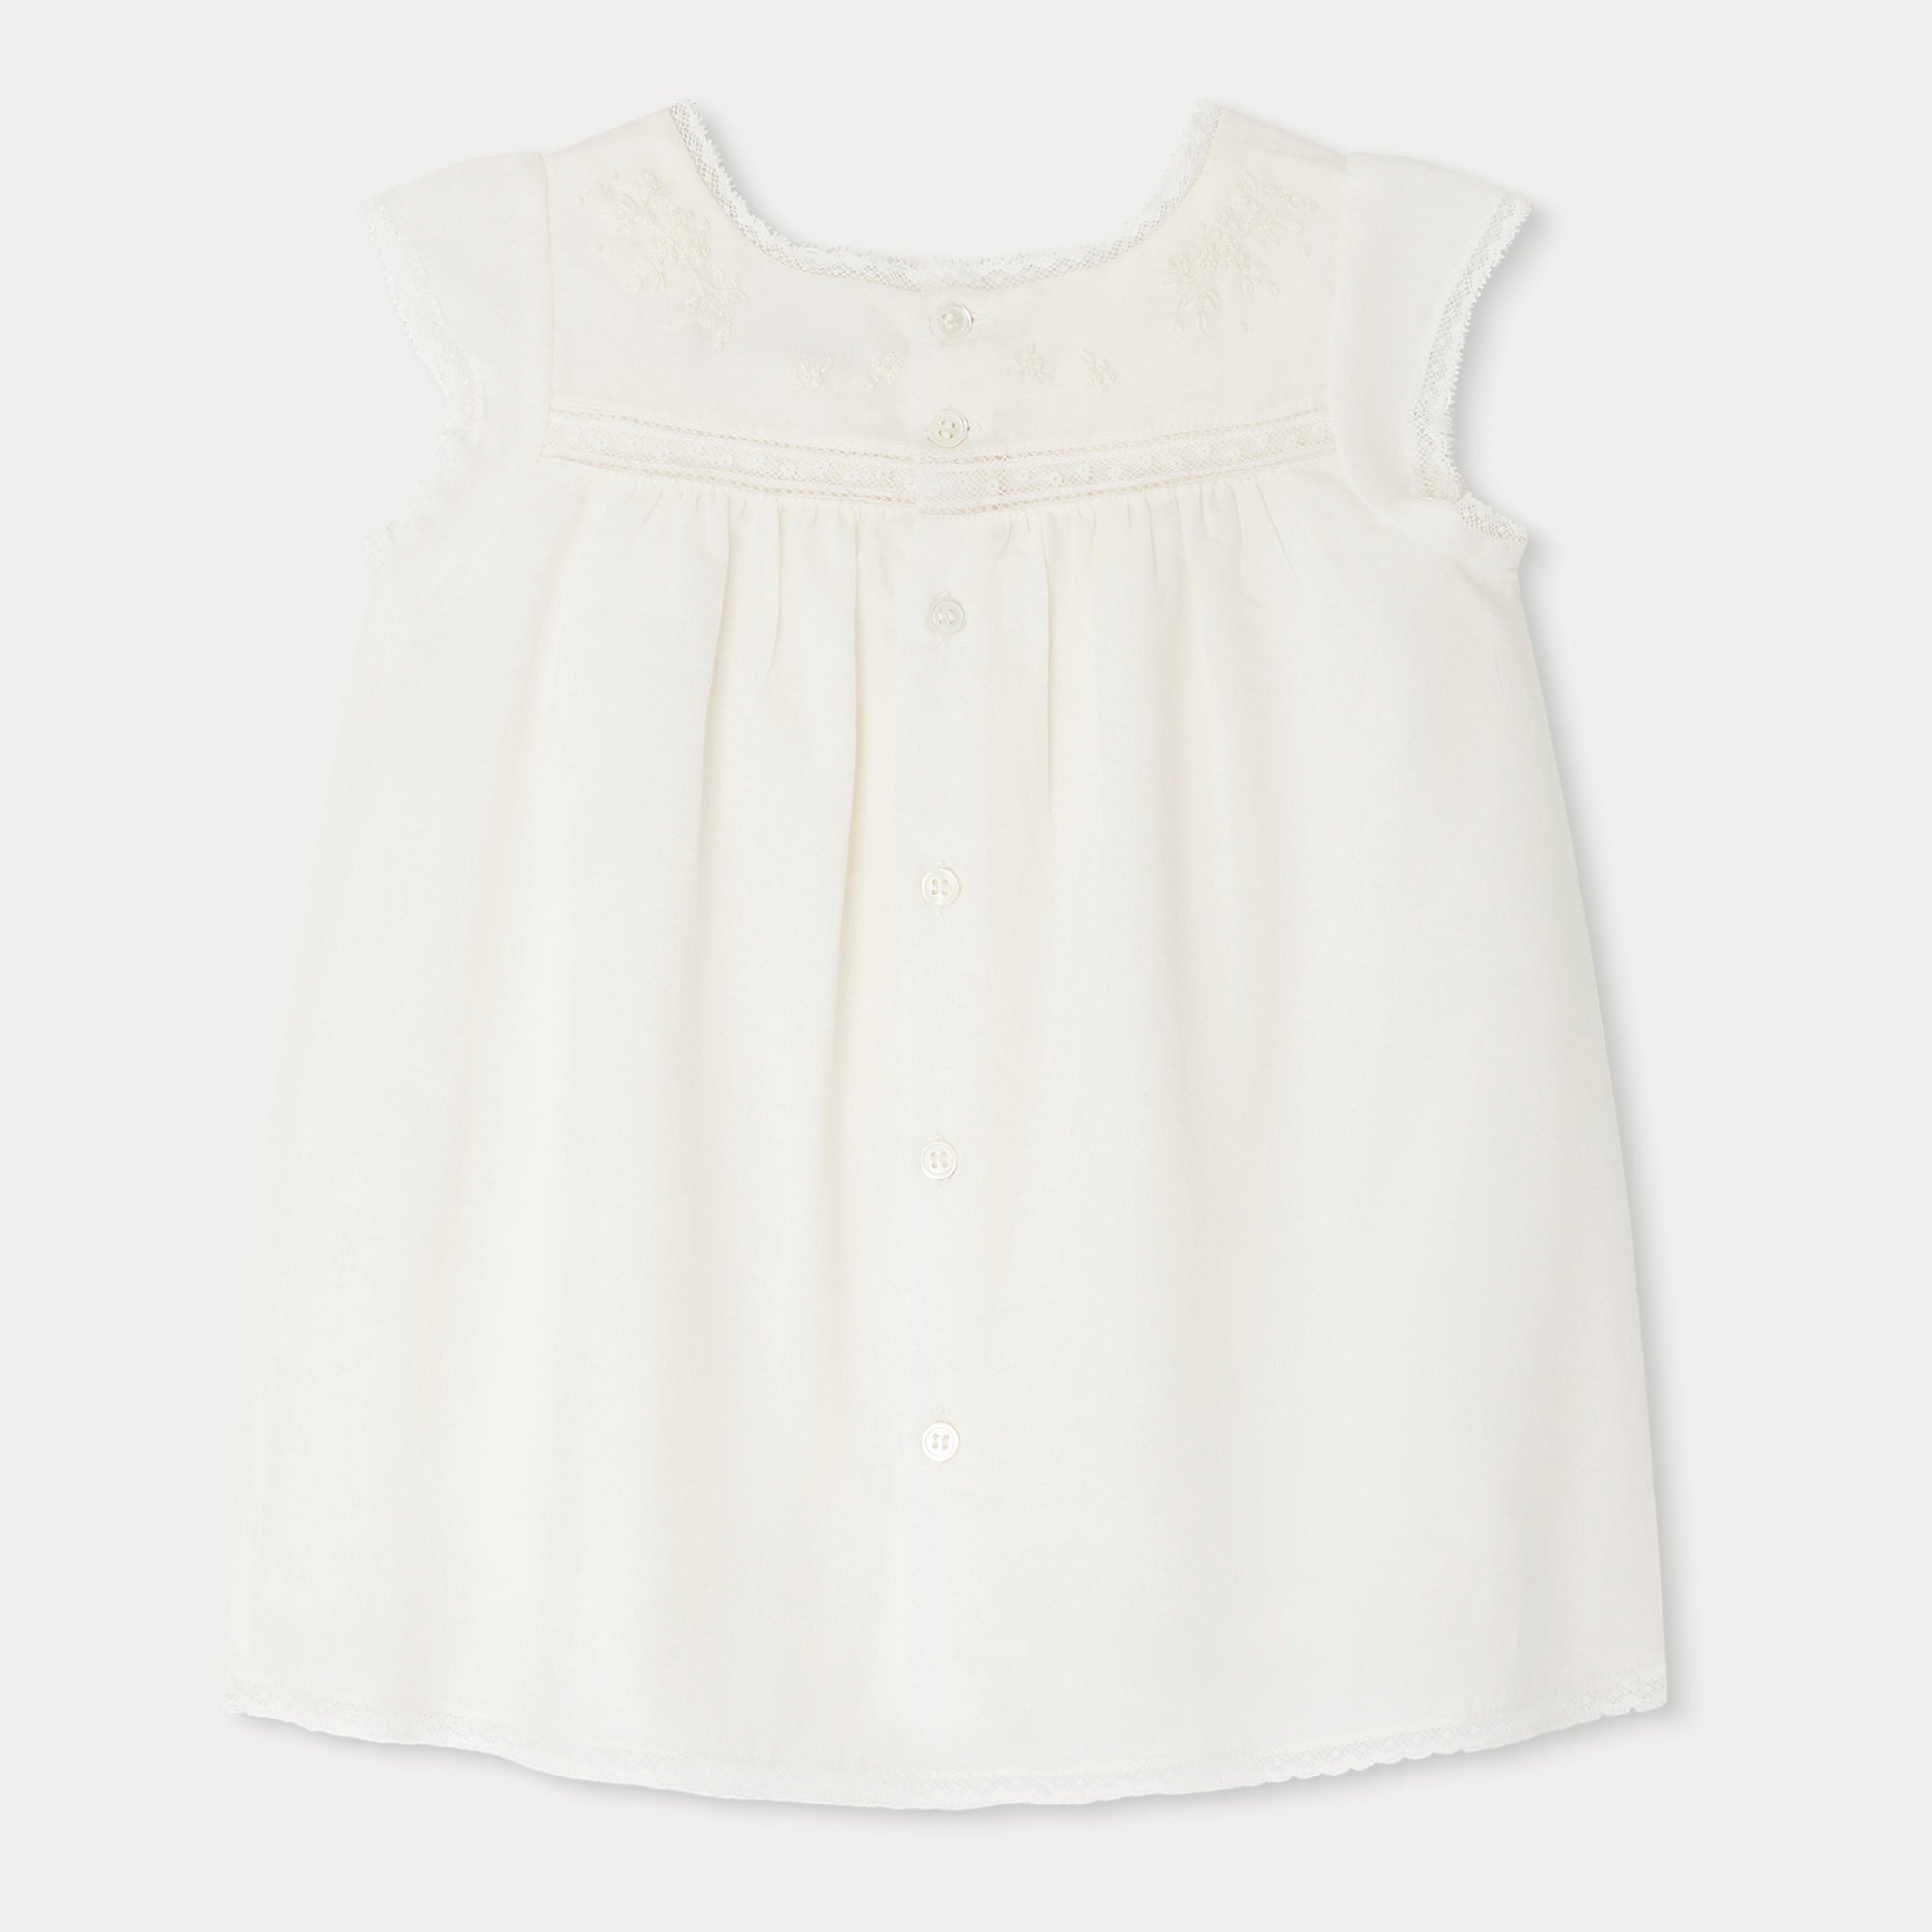 Baby Girls White Cotton Dress